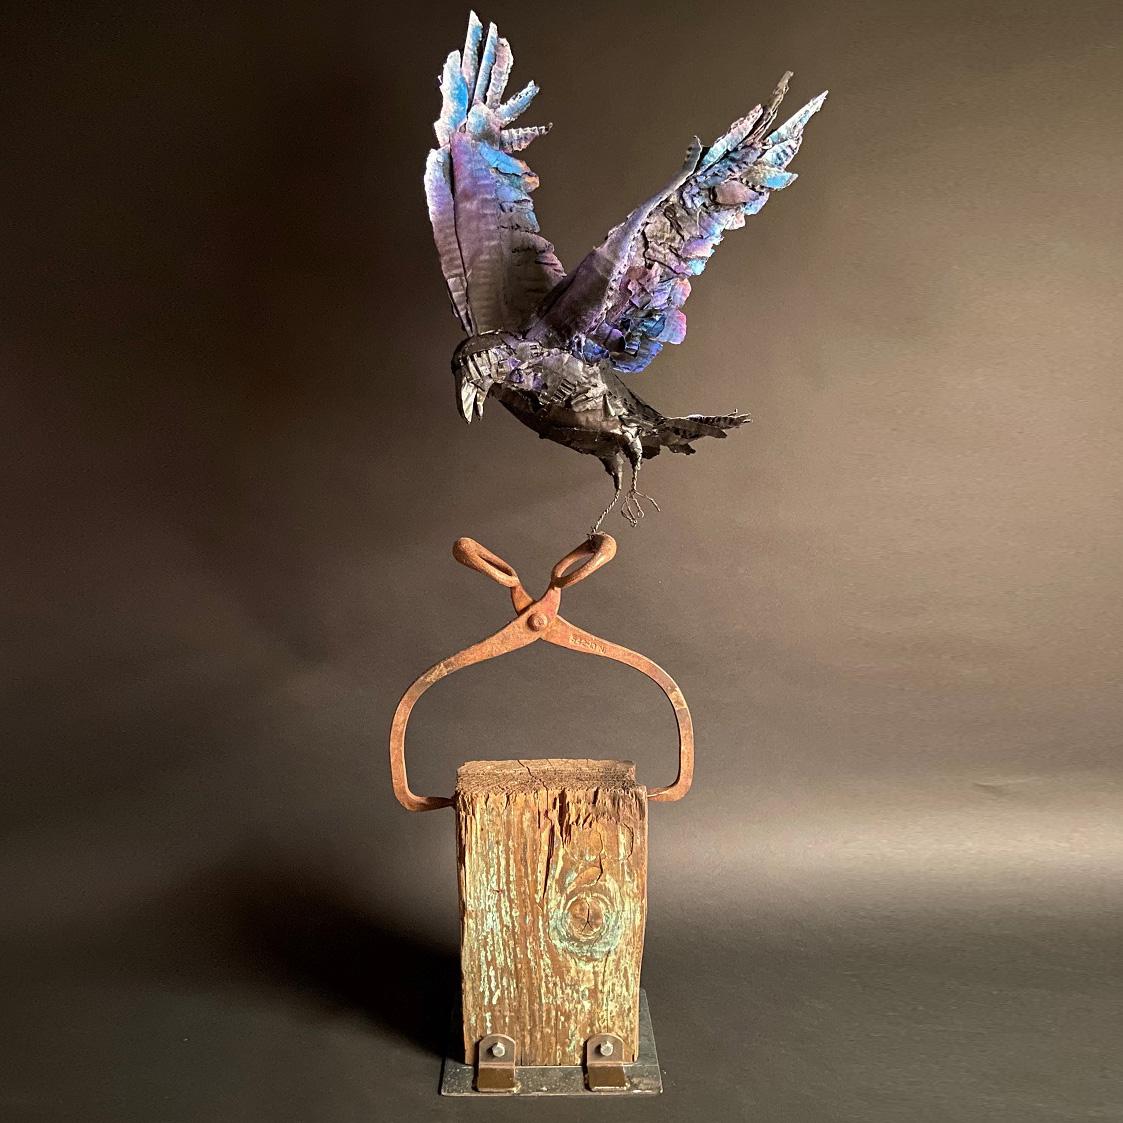 Debbie Korbel Figurative Sculpture - A Magisterial Mixed Media Cardboard Sculpture, "As the Crow Flies"